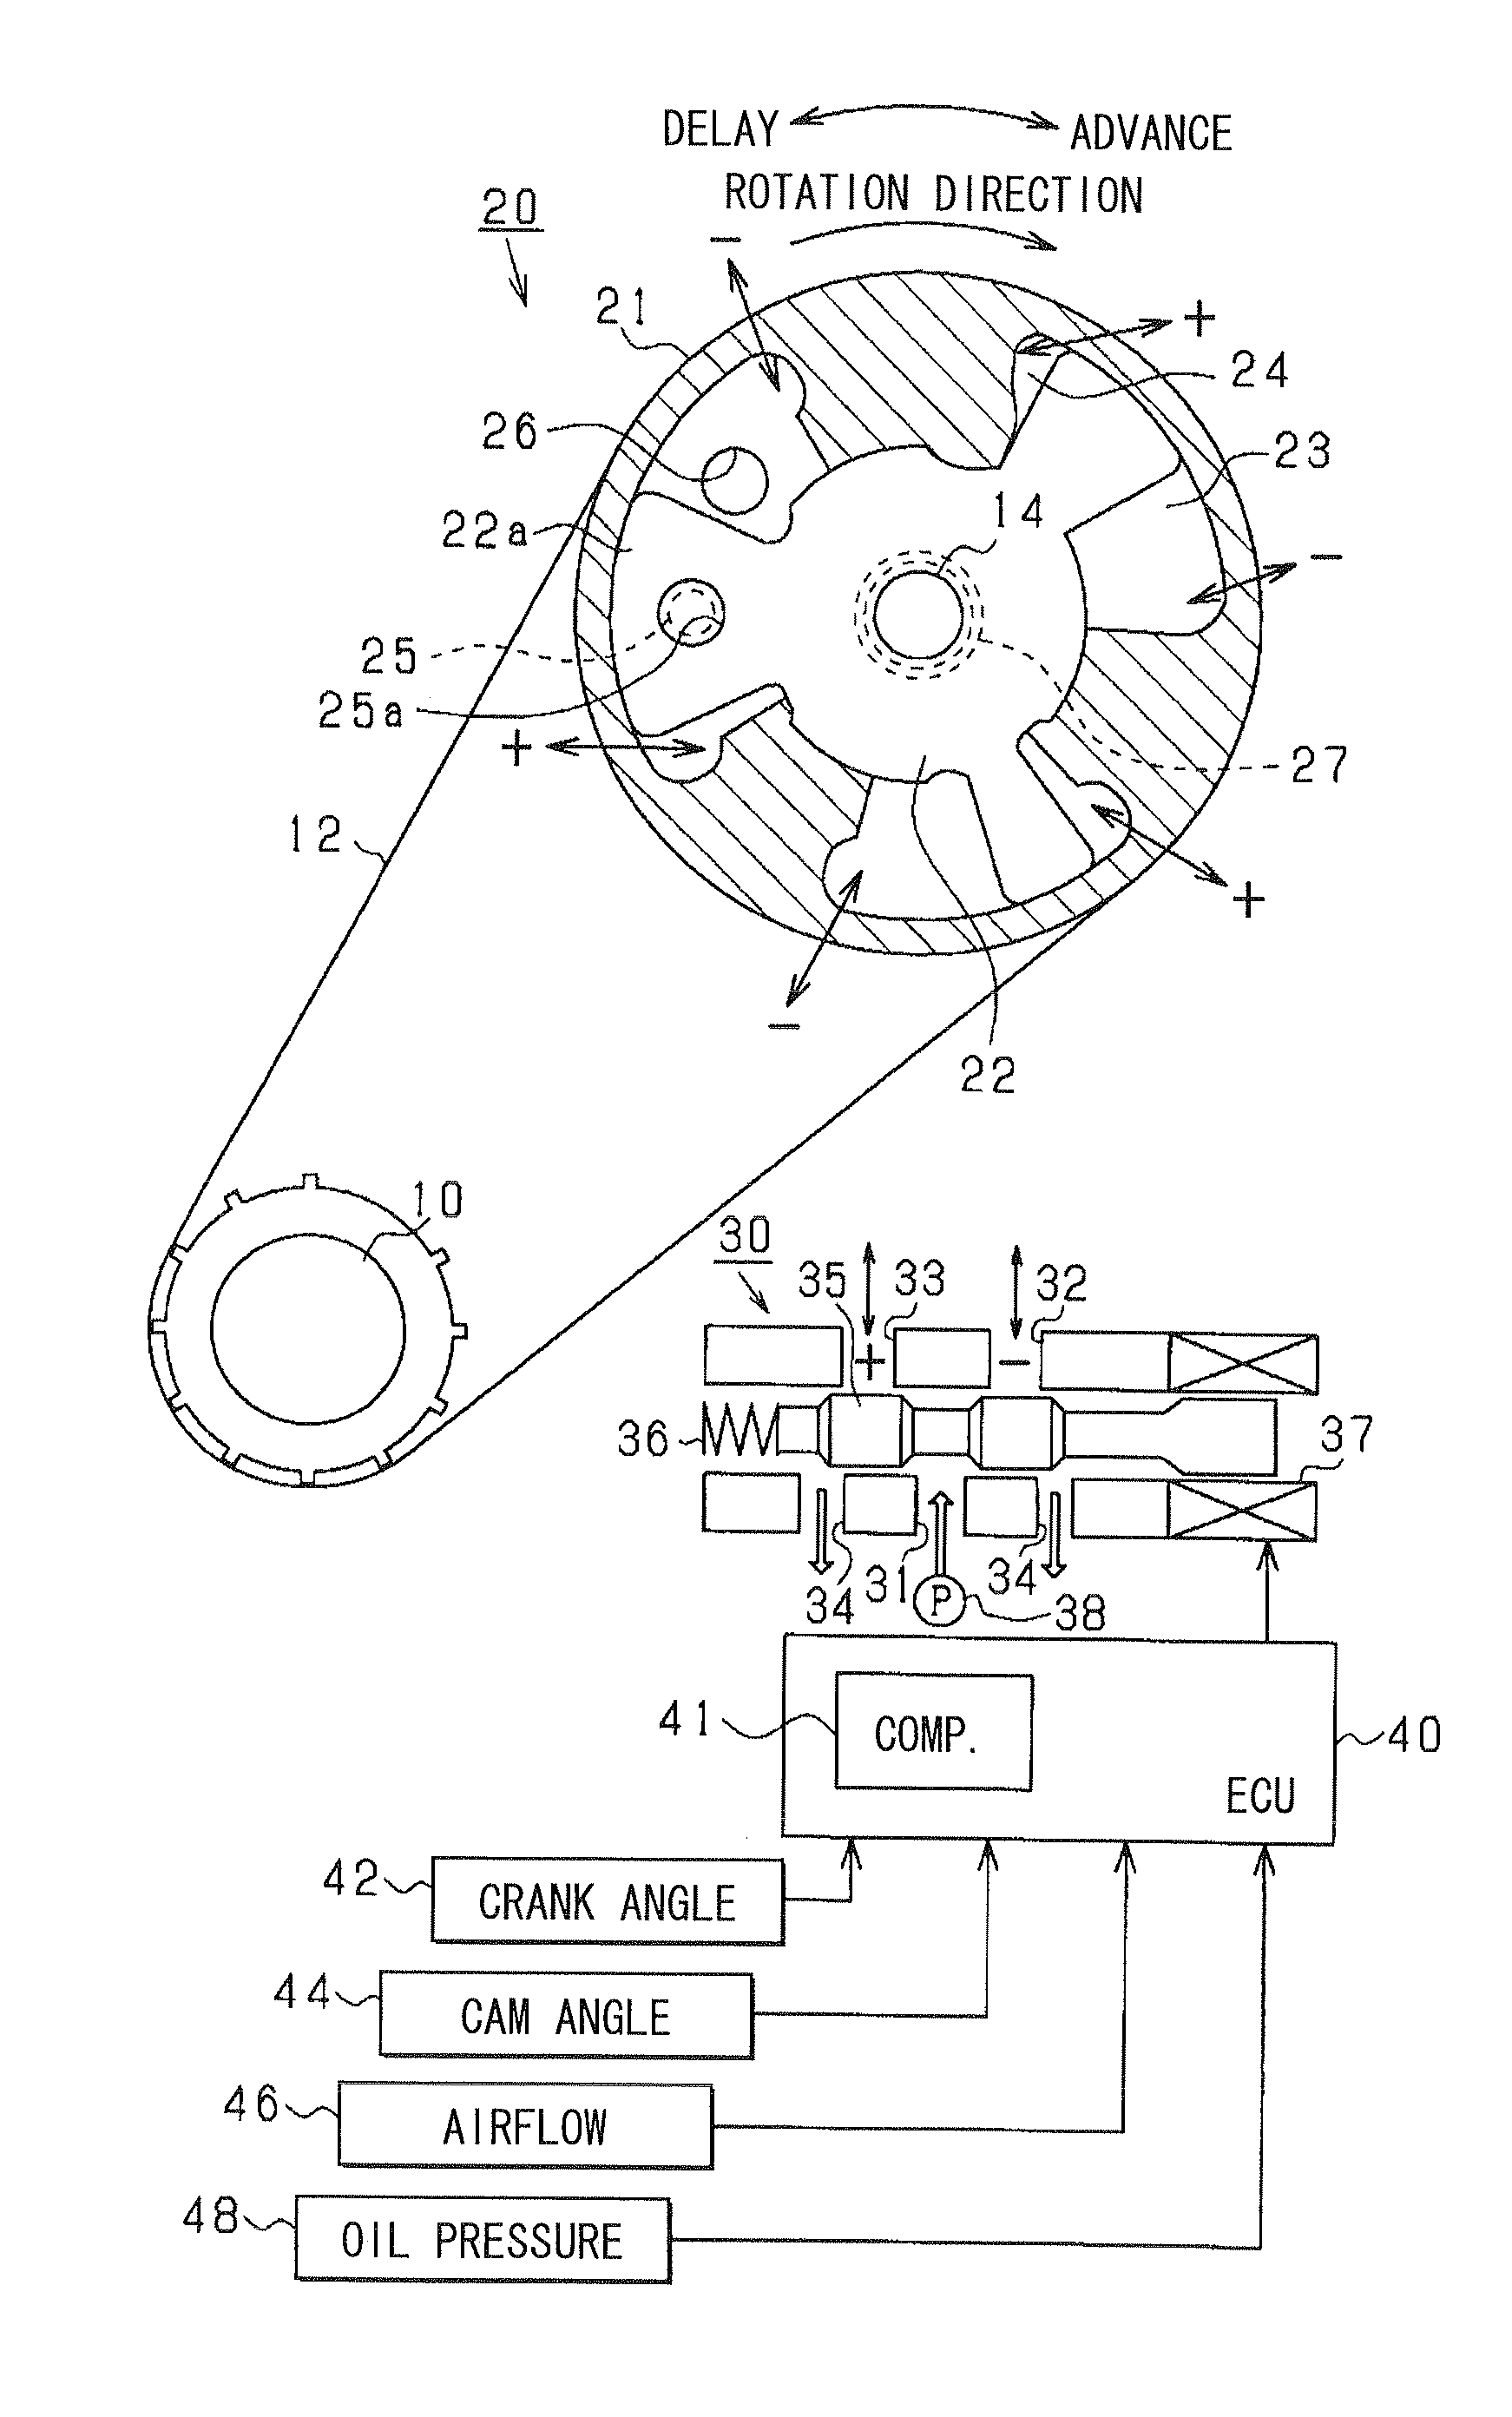 Engine valve control device